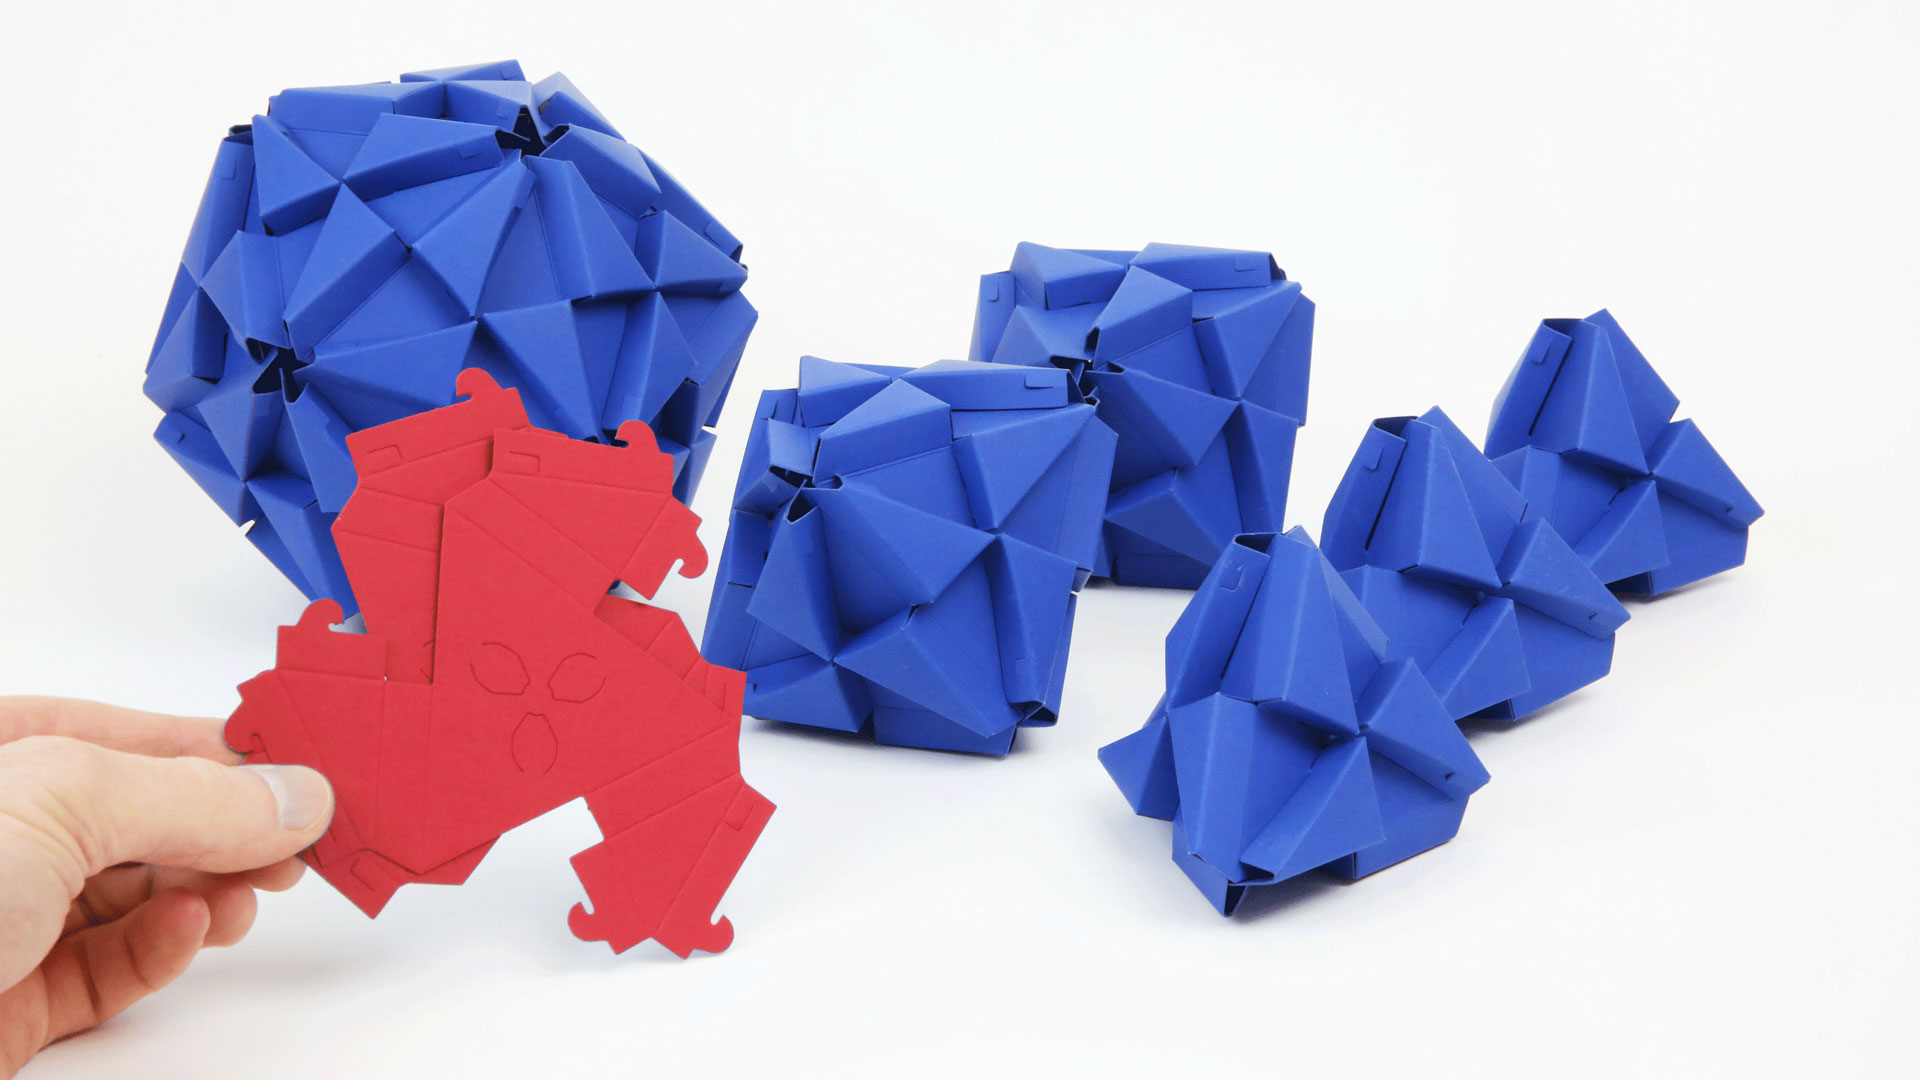 TROXES - Origami Building Blocks